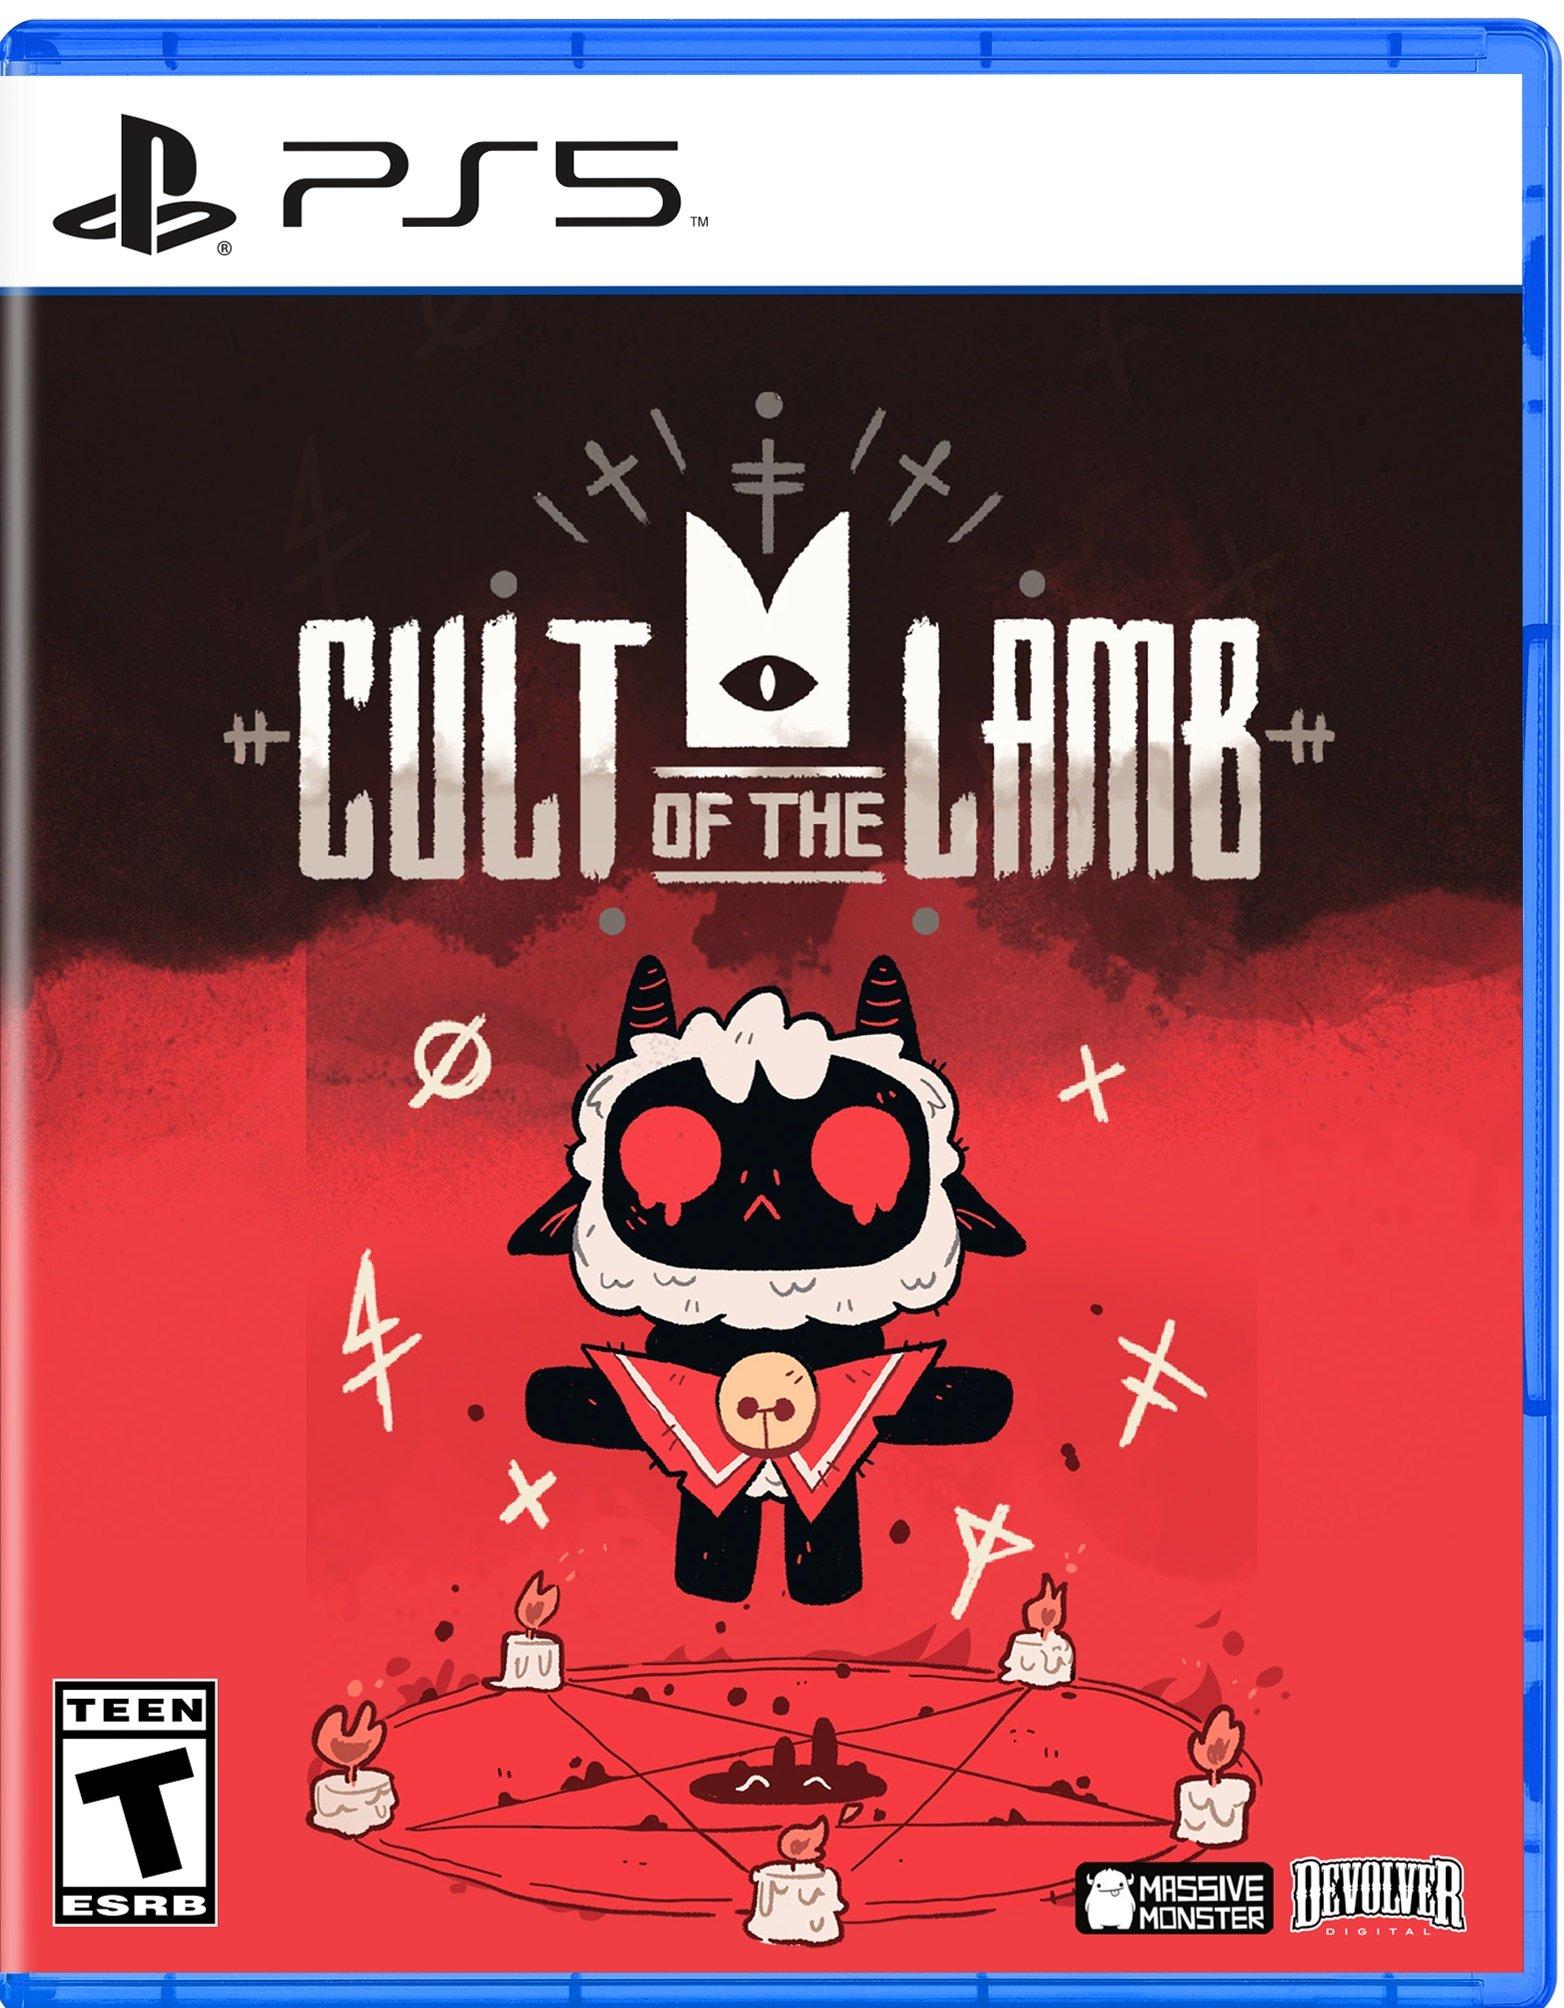 Cult of the Lamb - PlayStation 5, PlayStation 5